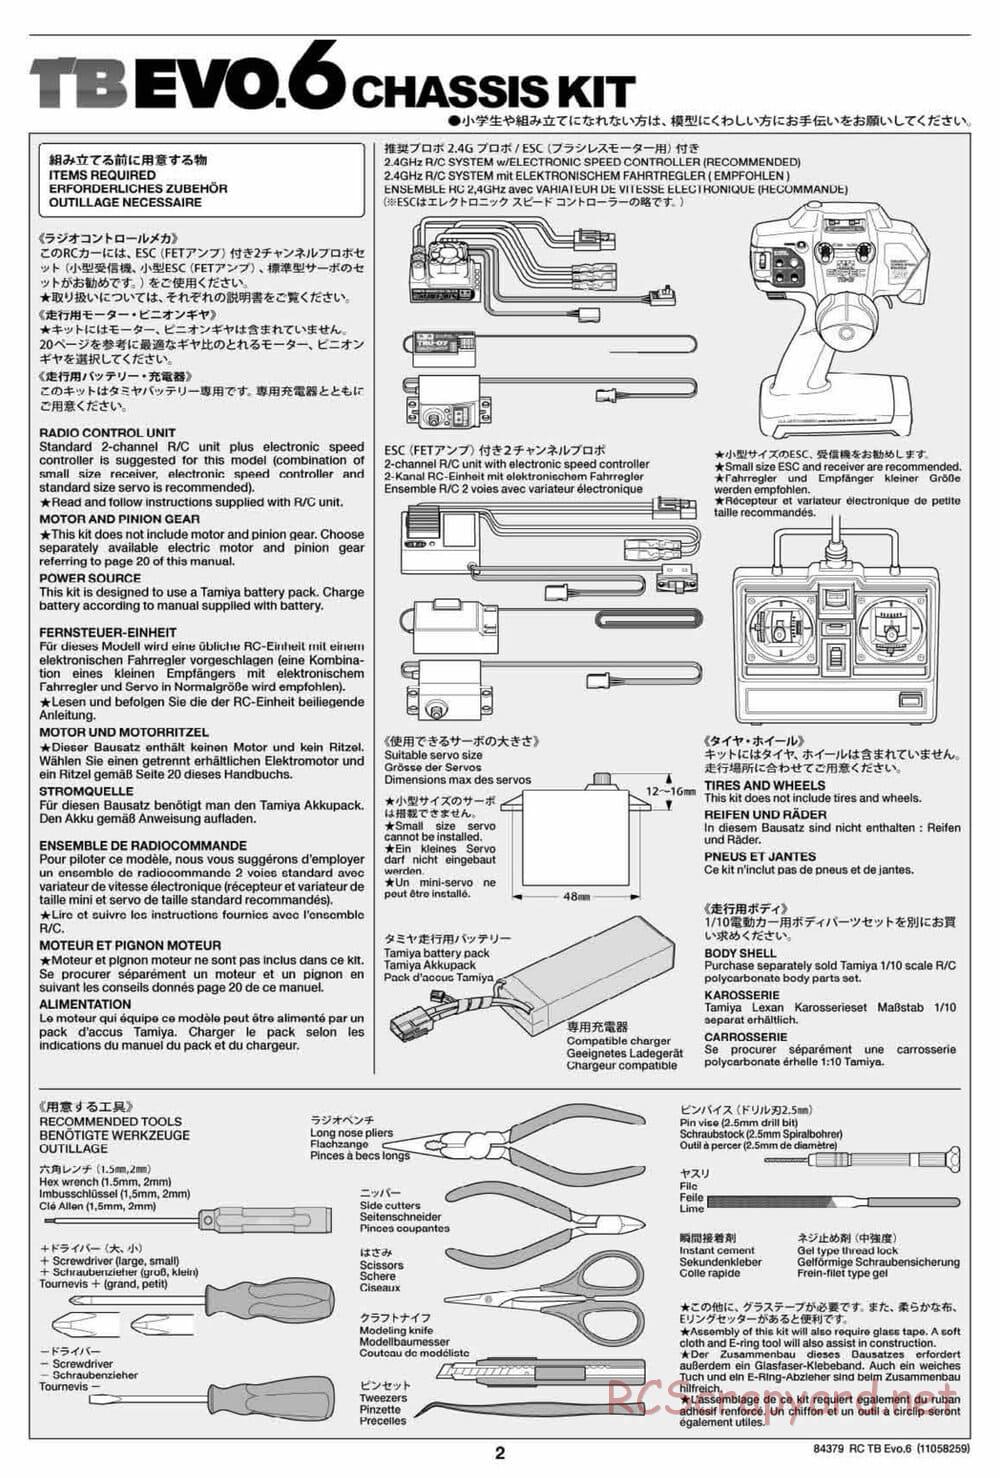 Tamiya - TB Evo.6 Chassis - Manual - Page 2